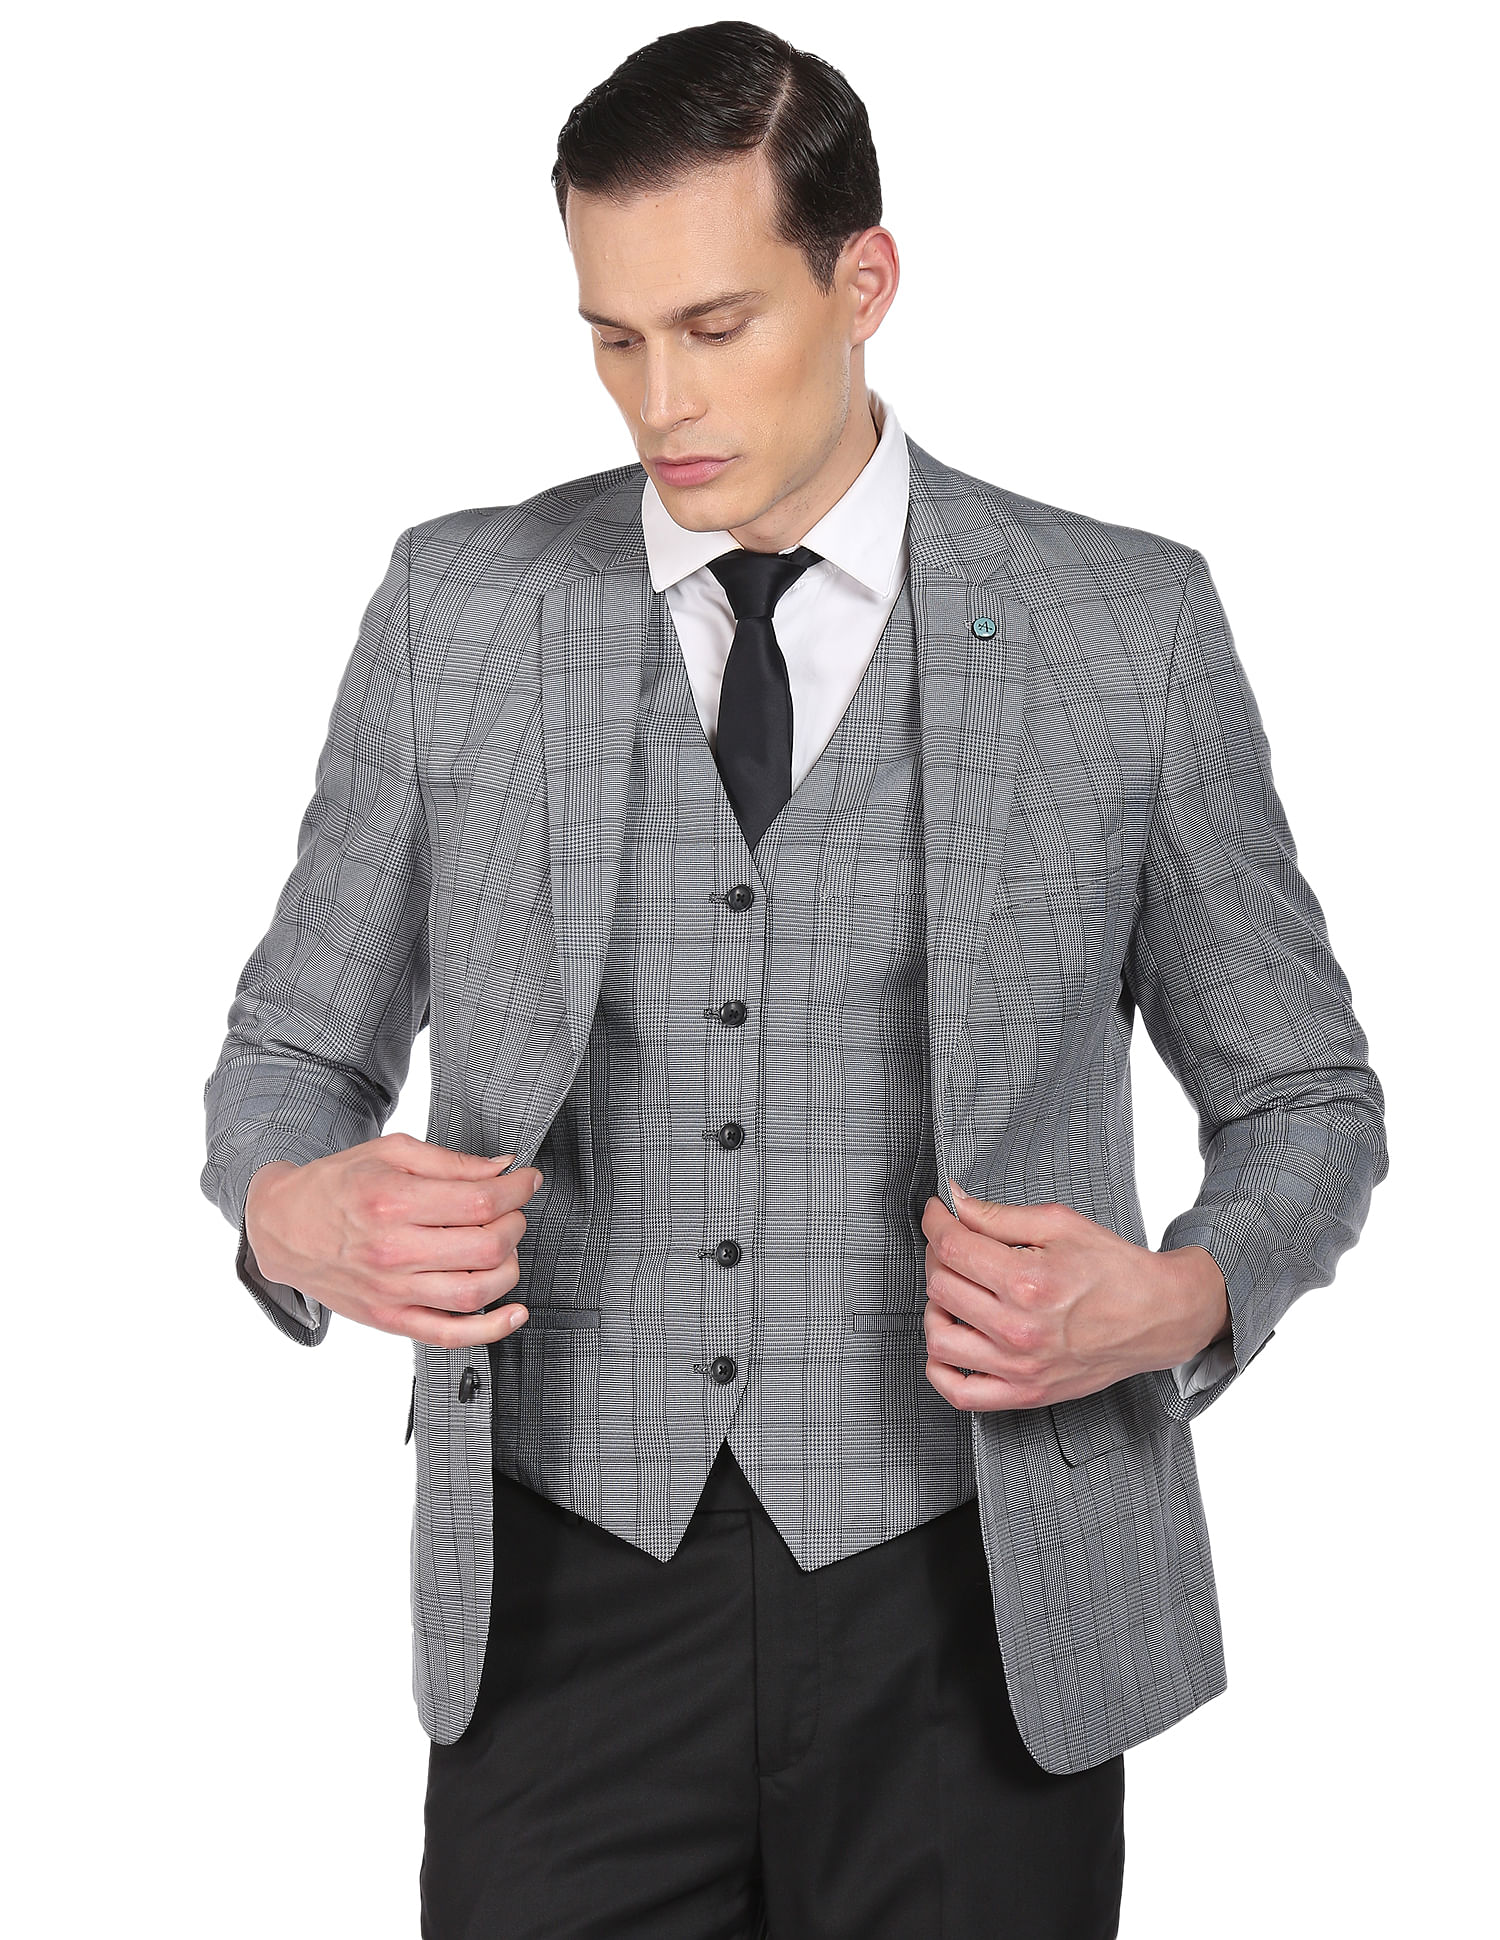 Buy Maroon Suit Sets for Men by ARROW Online | Ajio.com